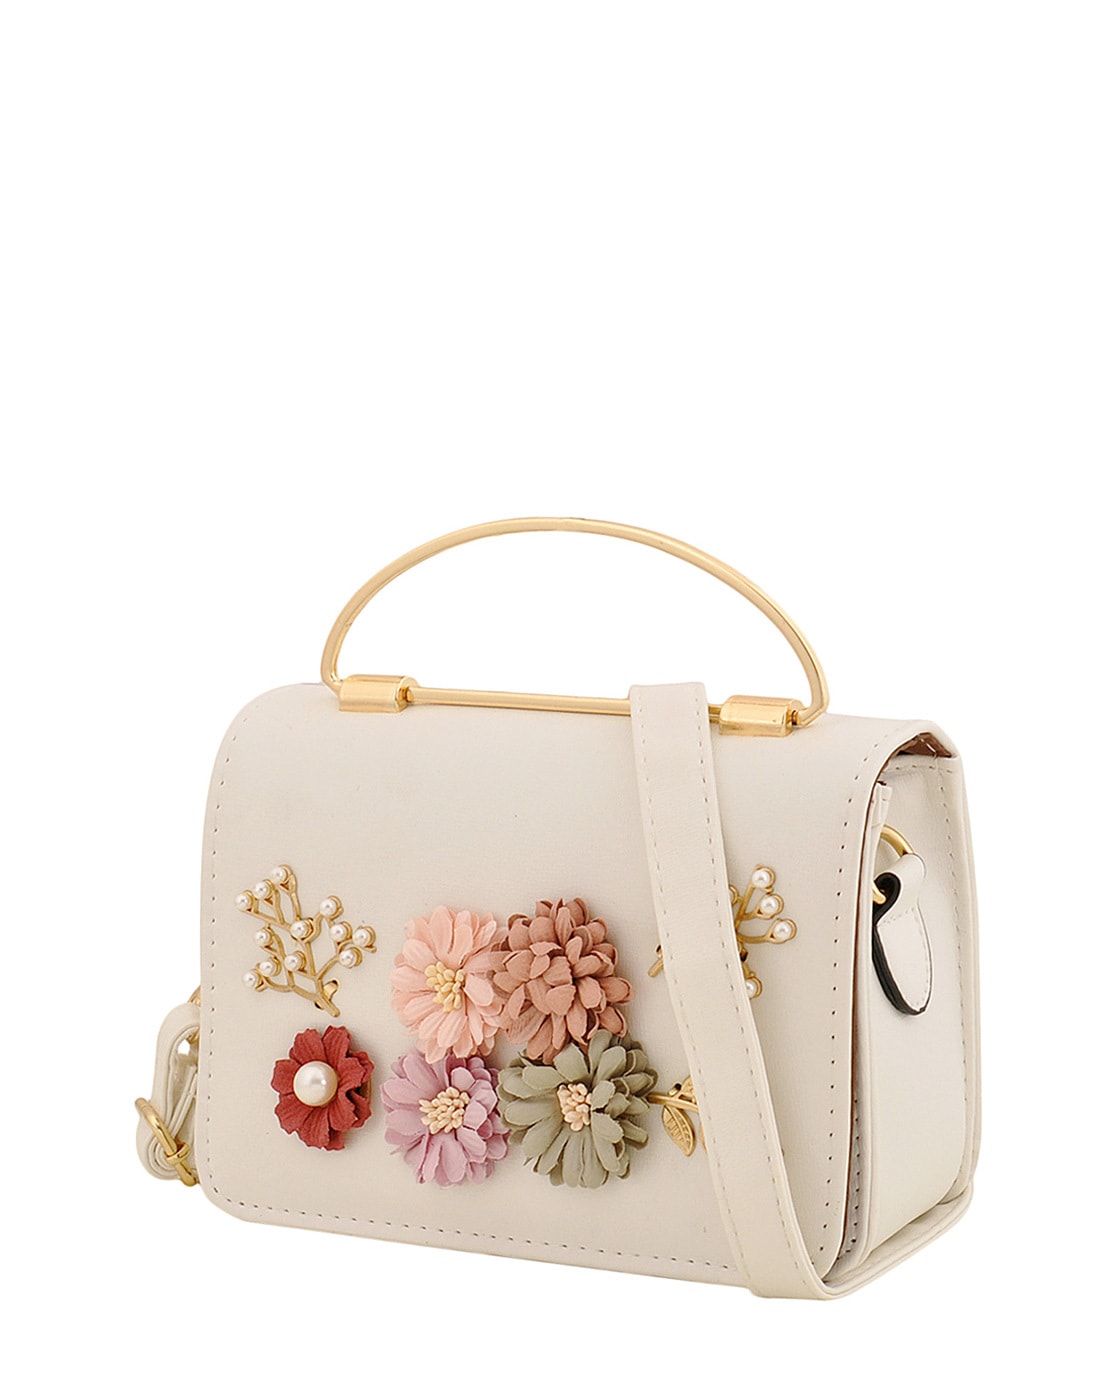 Handbag Collection😍😍/ Online Handbag😘/ Ladies Hand Bag❤/ Ladies Handbags  Design/ Amazon Handbag - YouTube